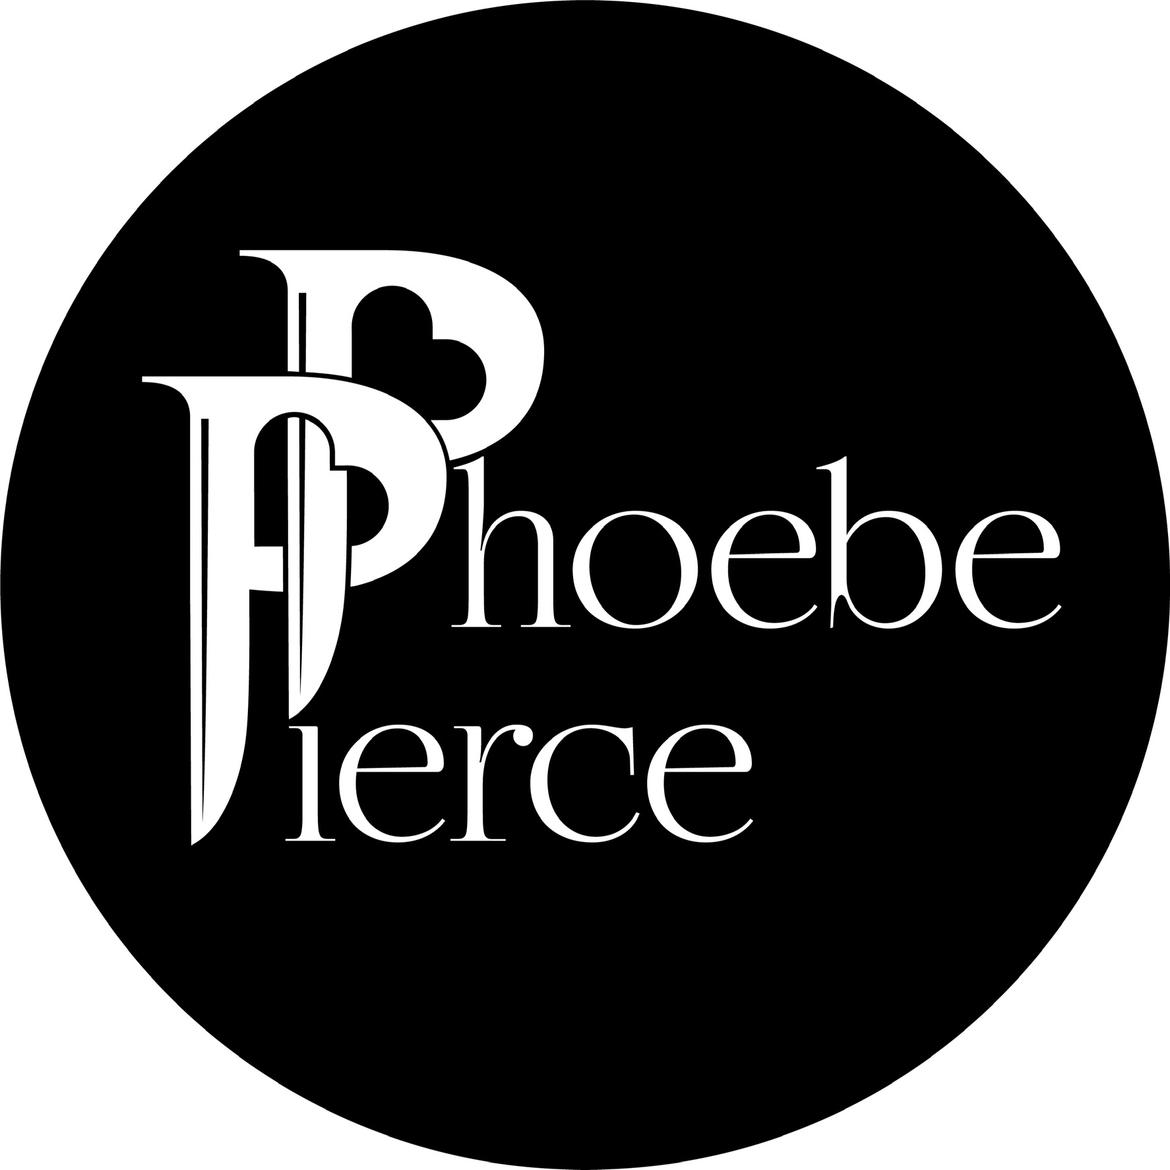 Phoebe.Pierce📚's images